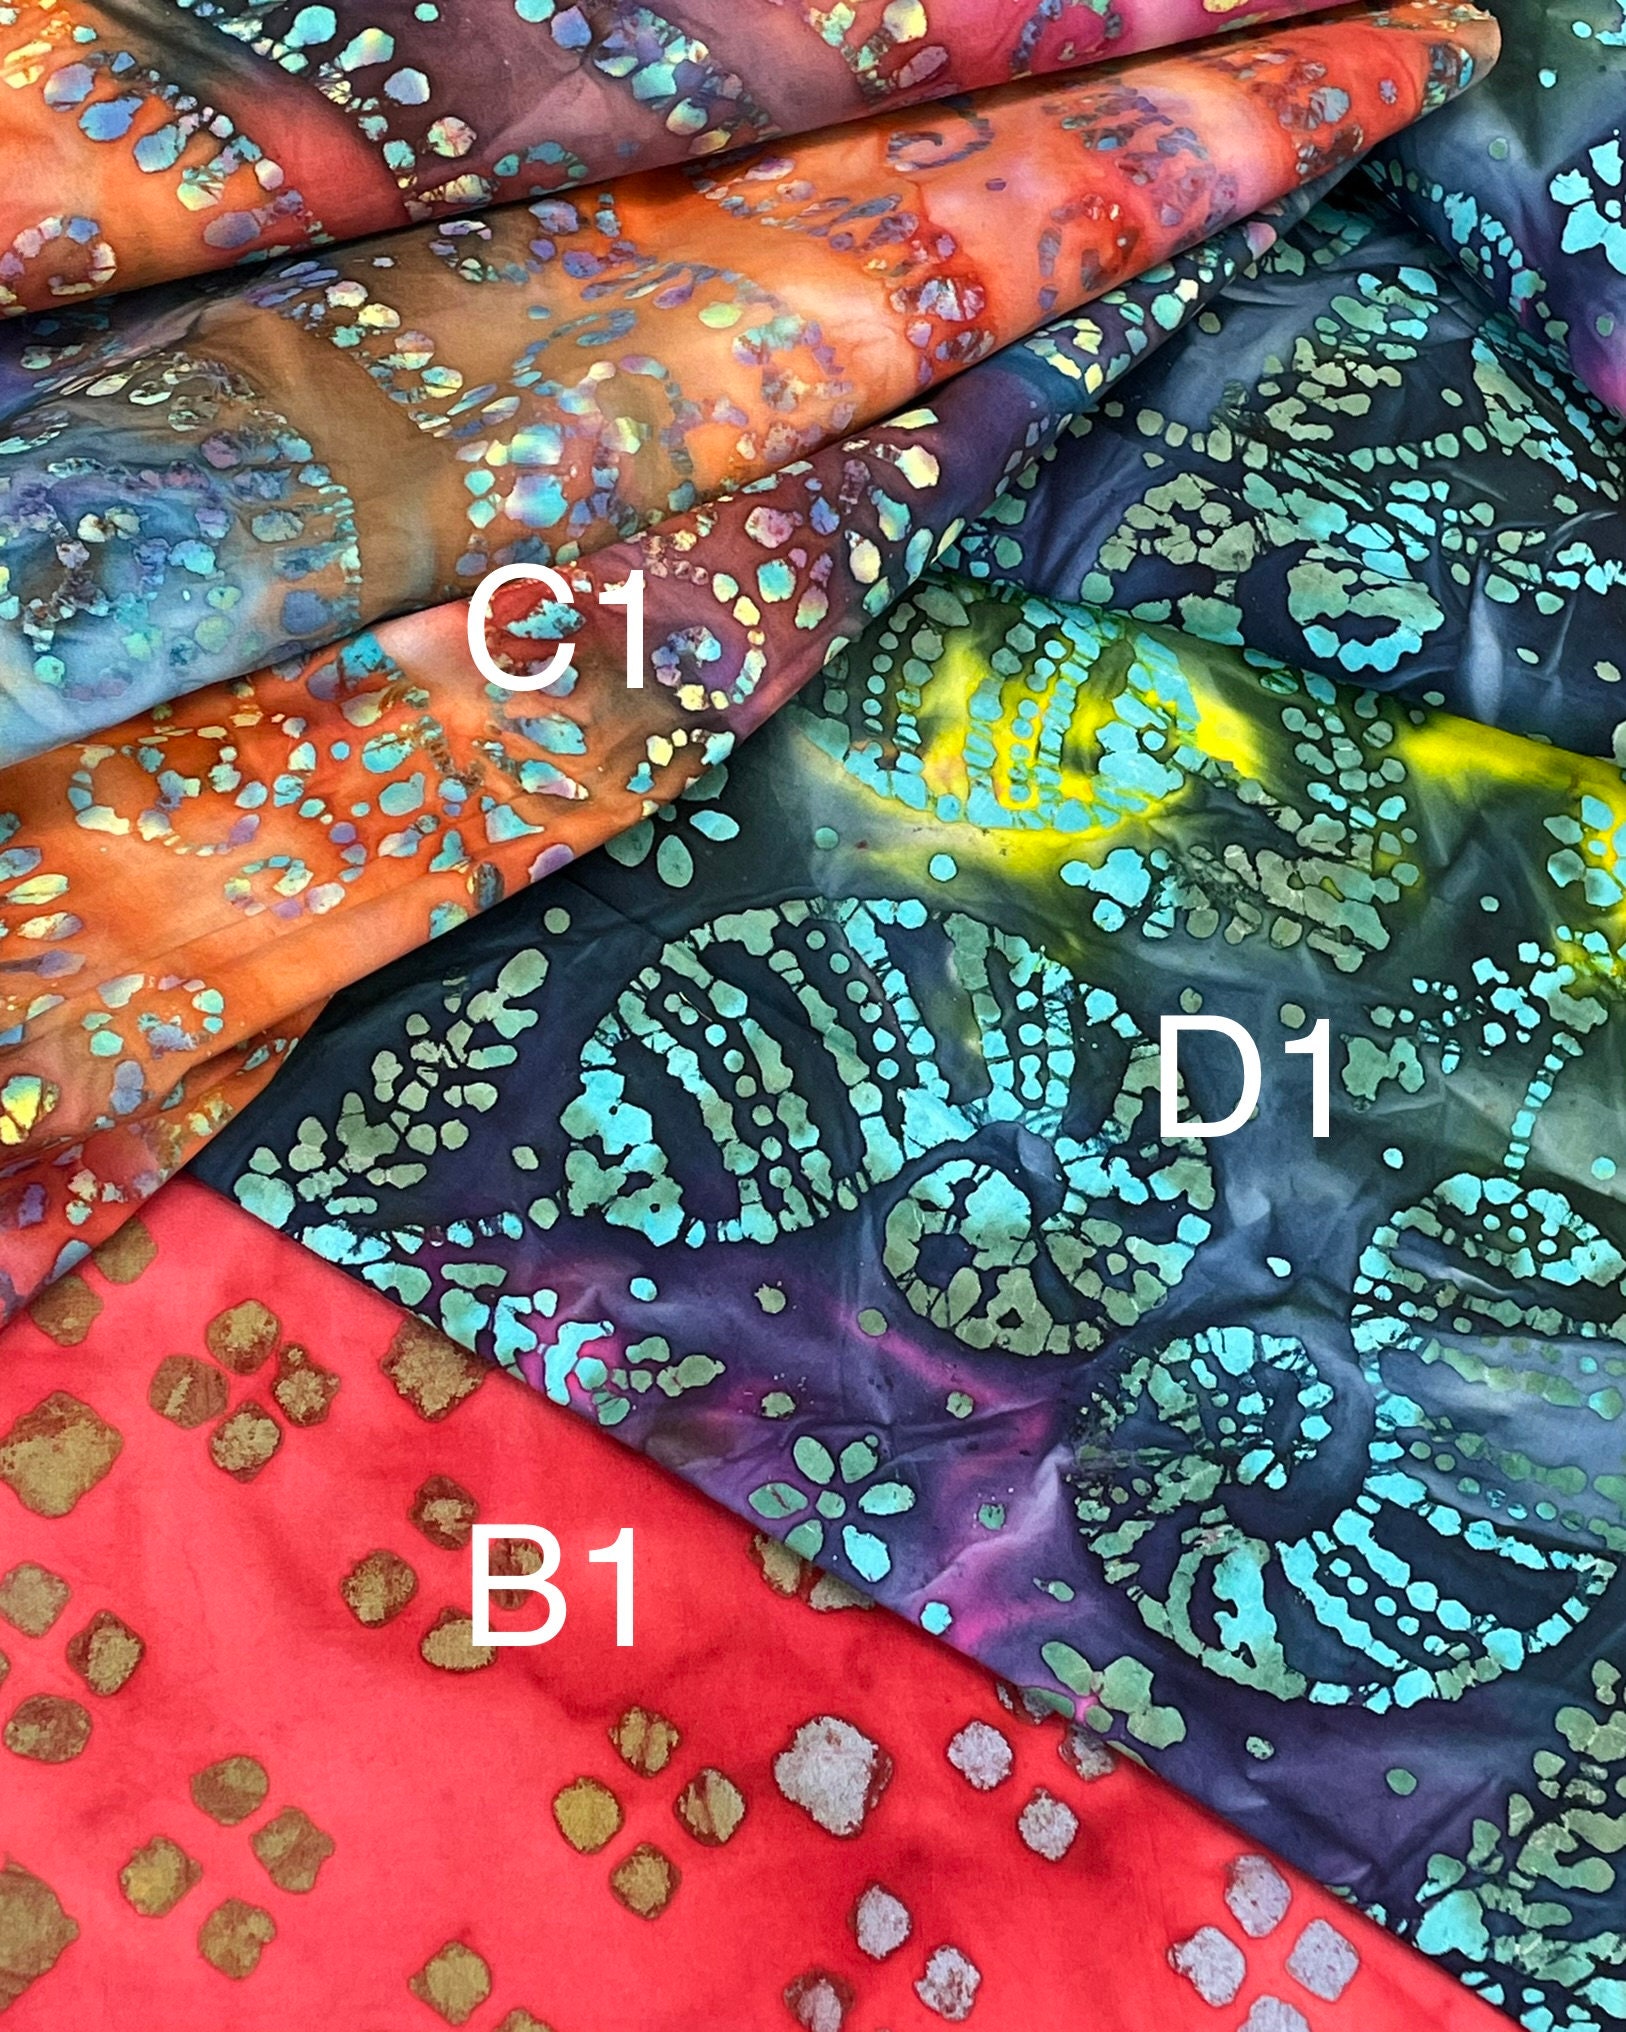 100% Cotton Hand Painted Batik Fabric by Nutex. Batik Material